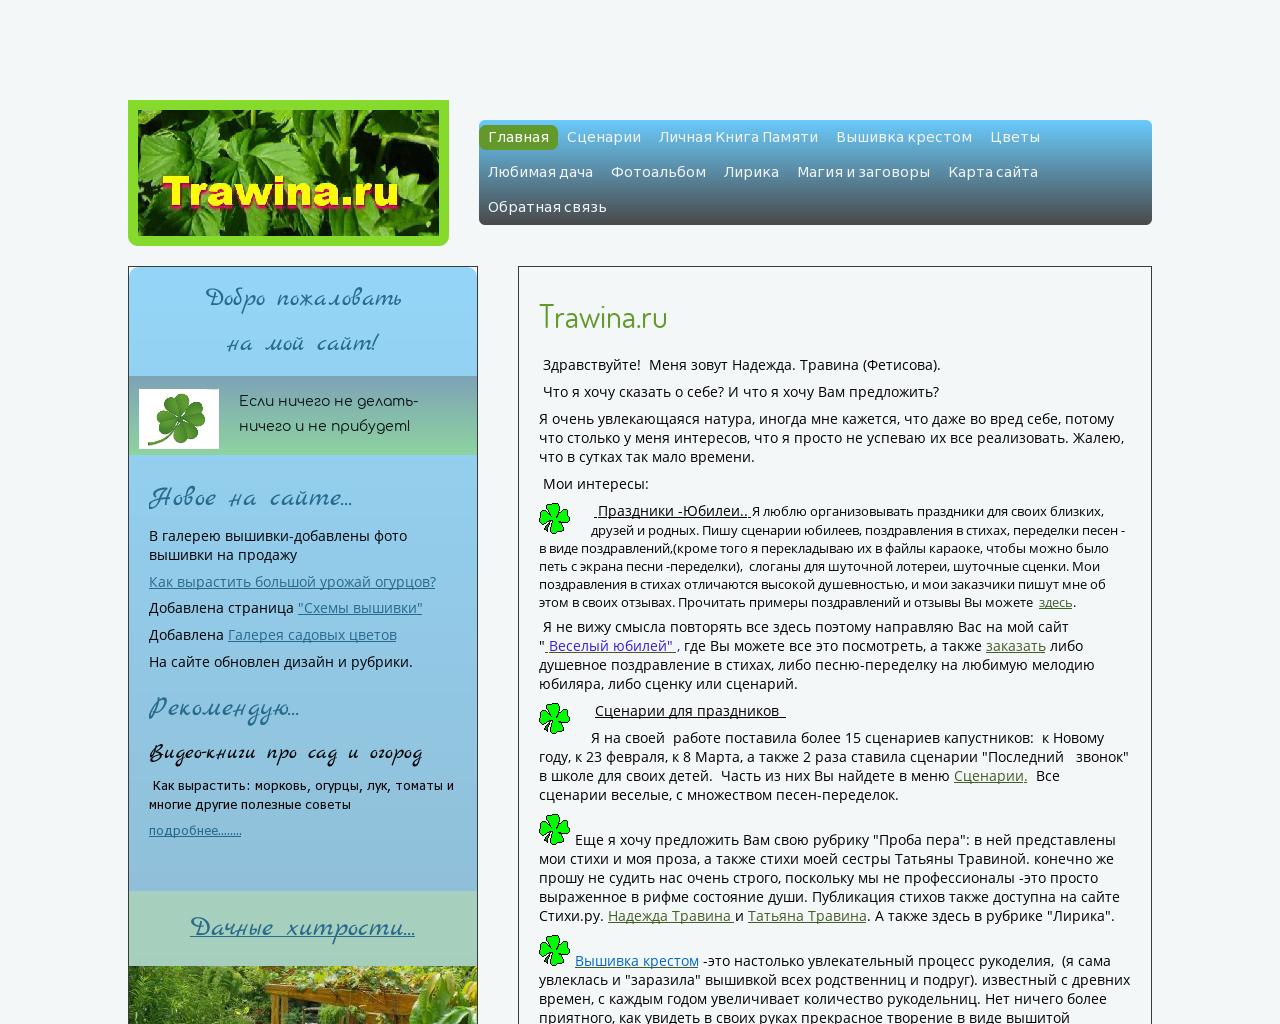 Изображение сайта trawina.ru в разрешении 1280x1024